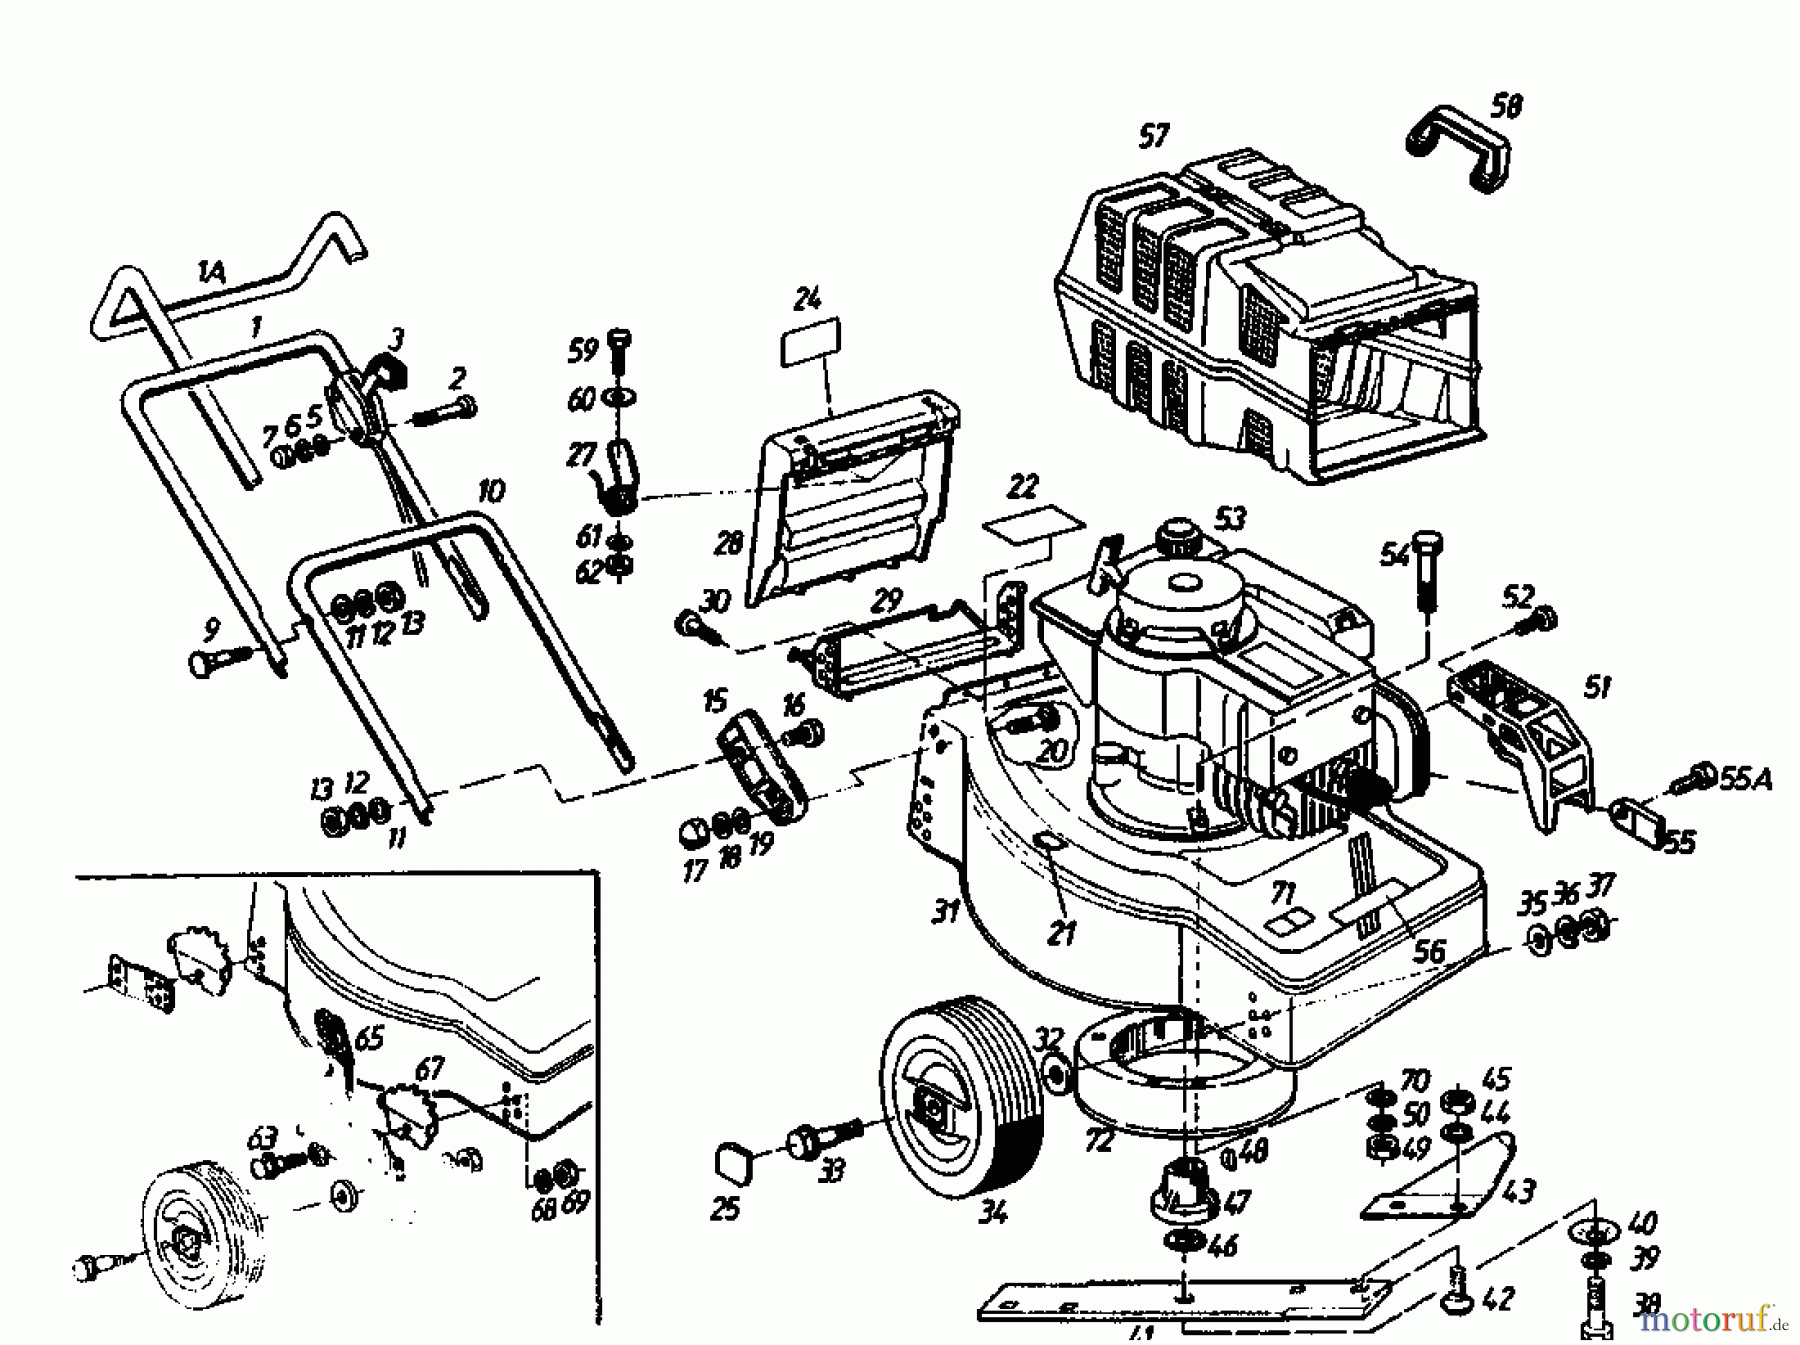  Golf Petrol mower Golf B 02880.01  (1987) Basic machine